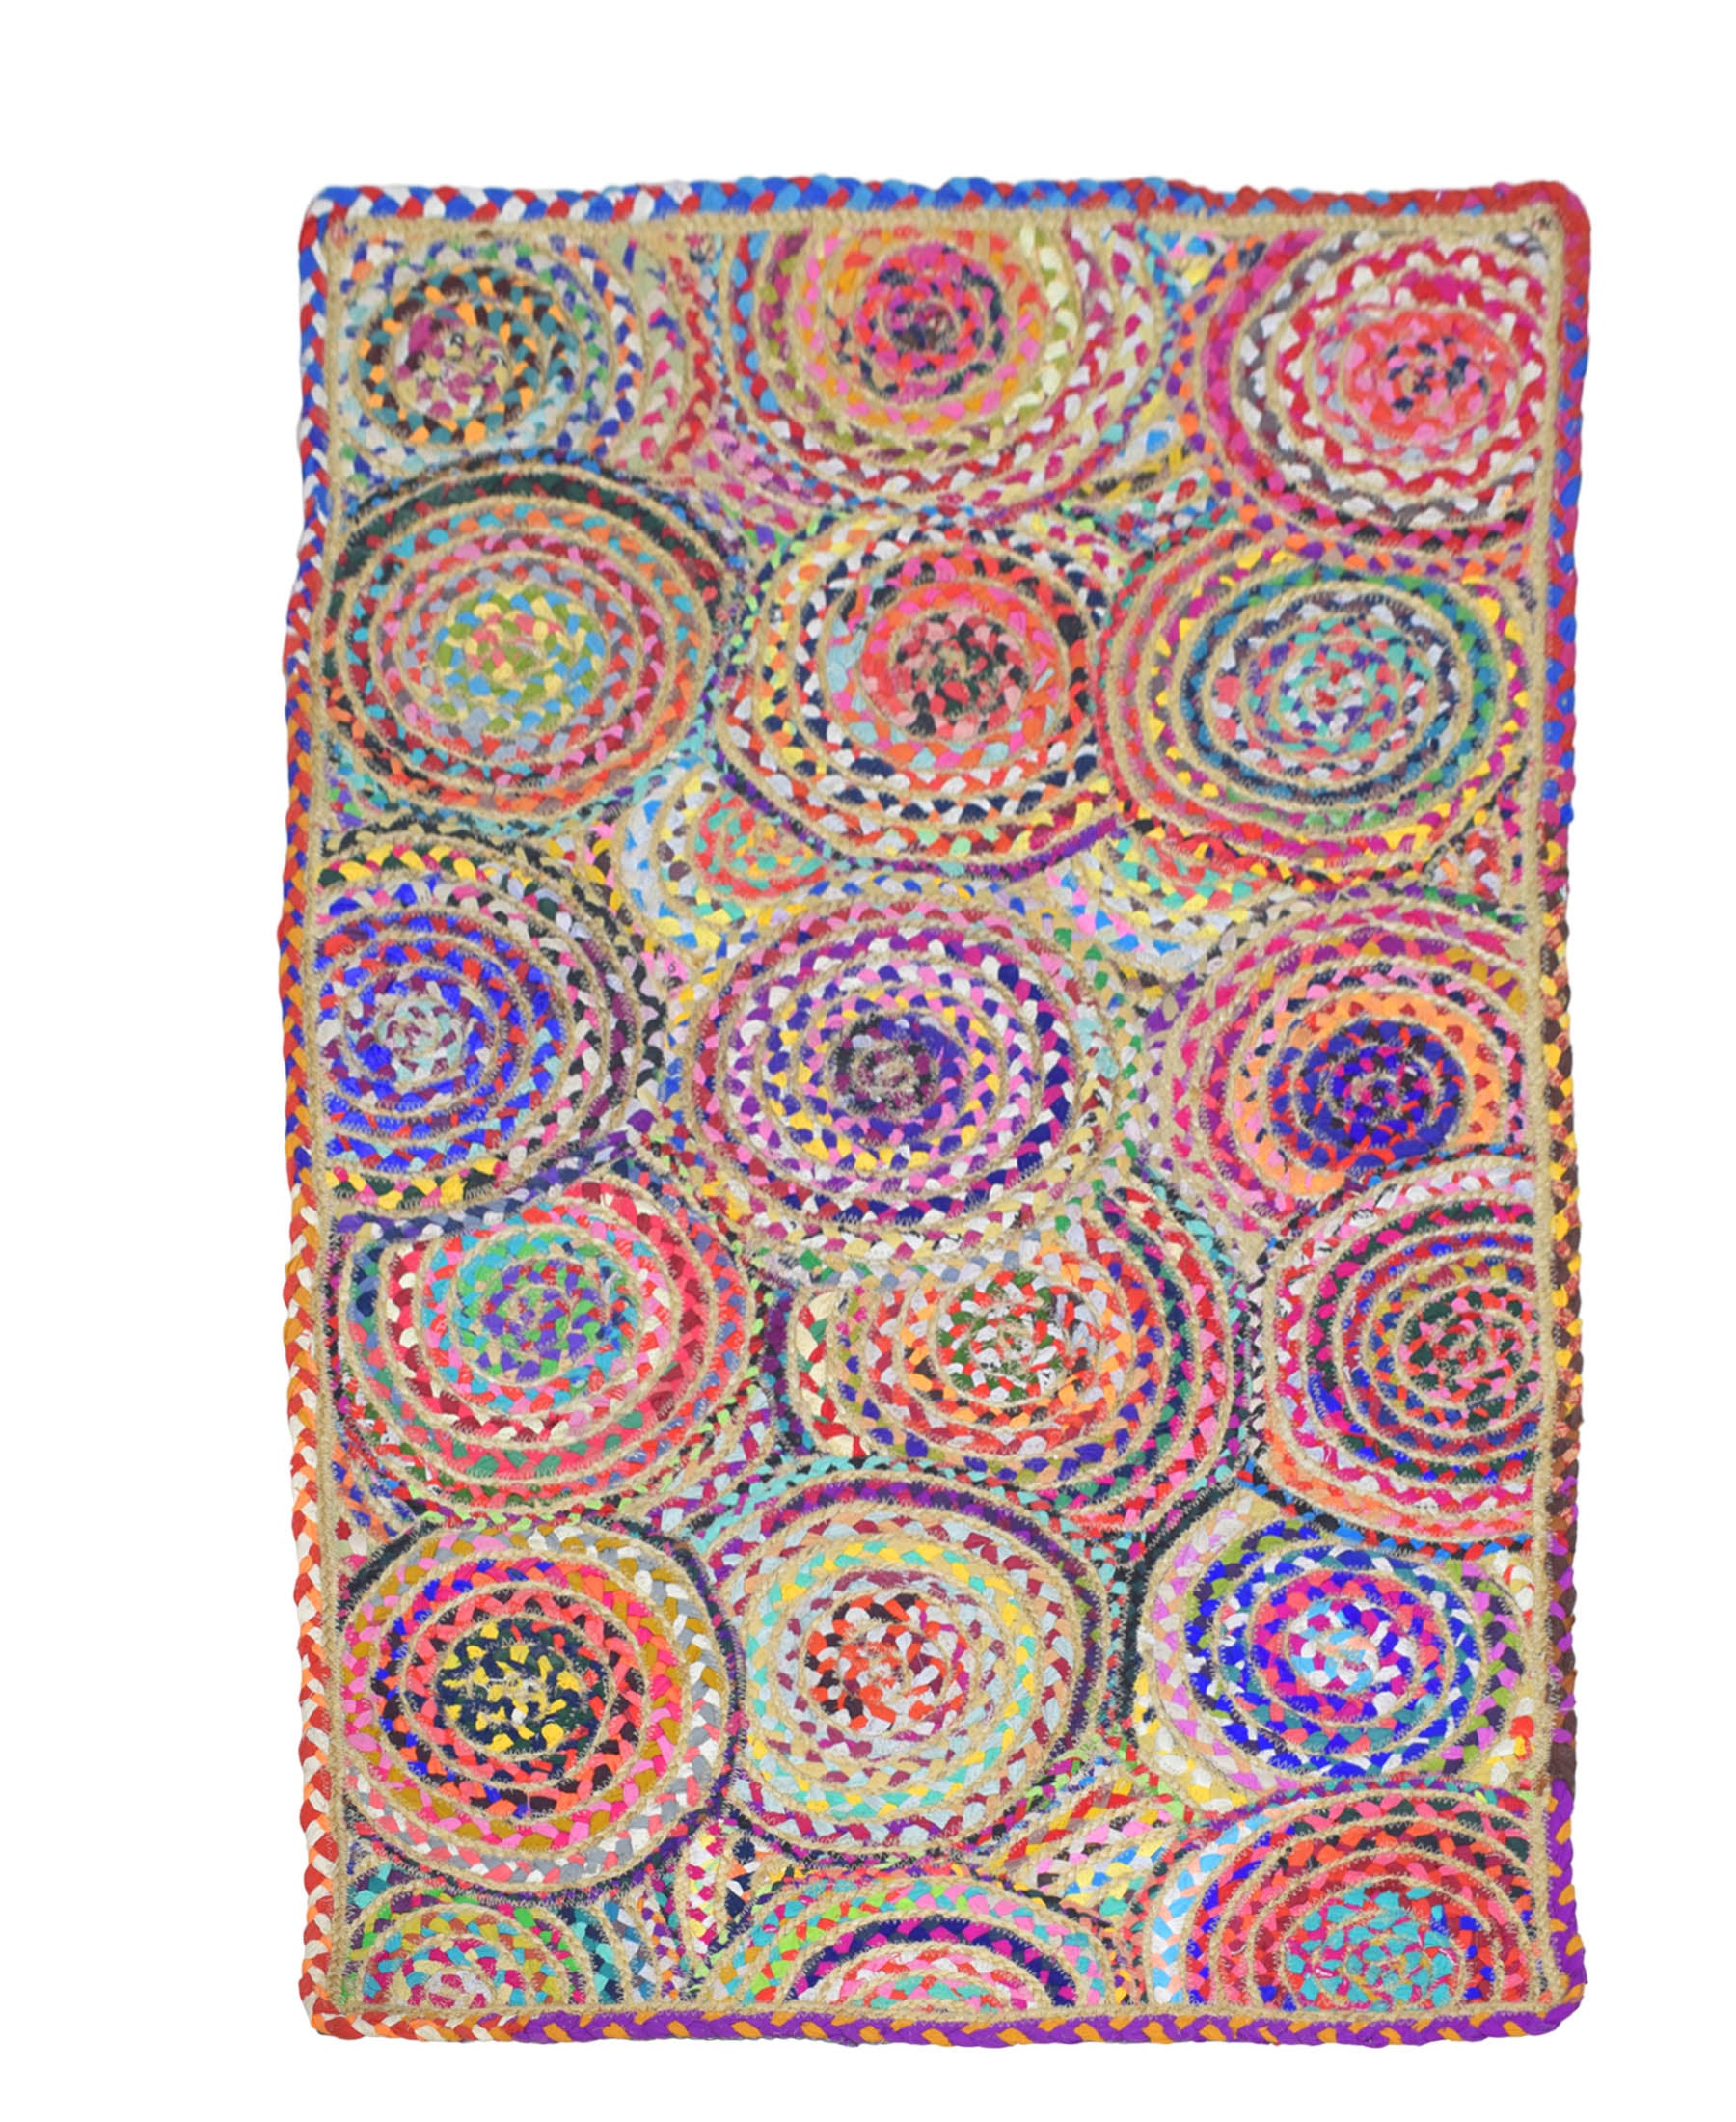 Indian Hand Weaved Circular Carpet 1500mm x 945mm - Assorted